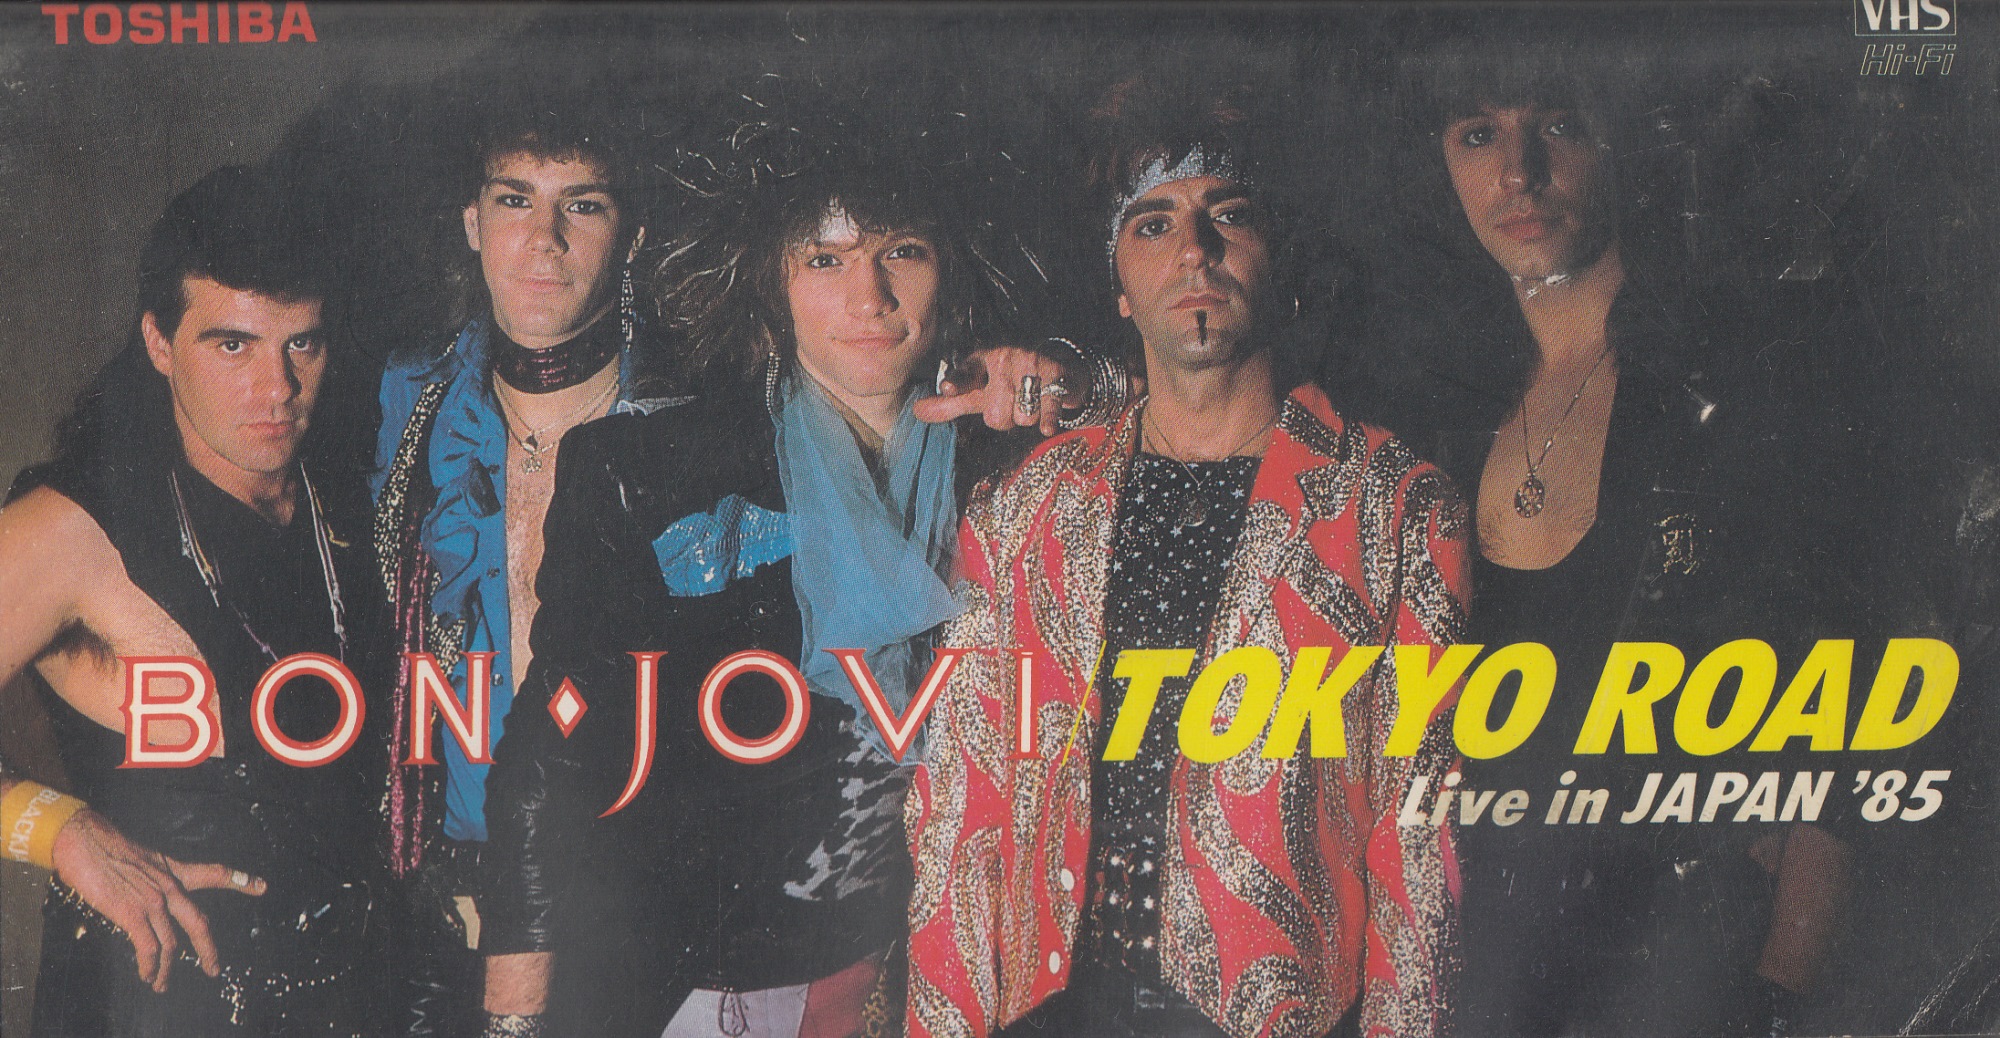 Bon Jovi Tokyo Road Live In Japan 85 Vhs Japan 1985 Redbank S Bon Jovi Collection